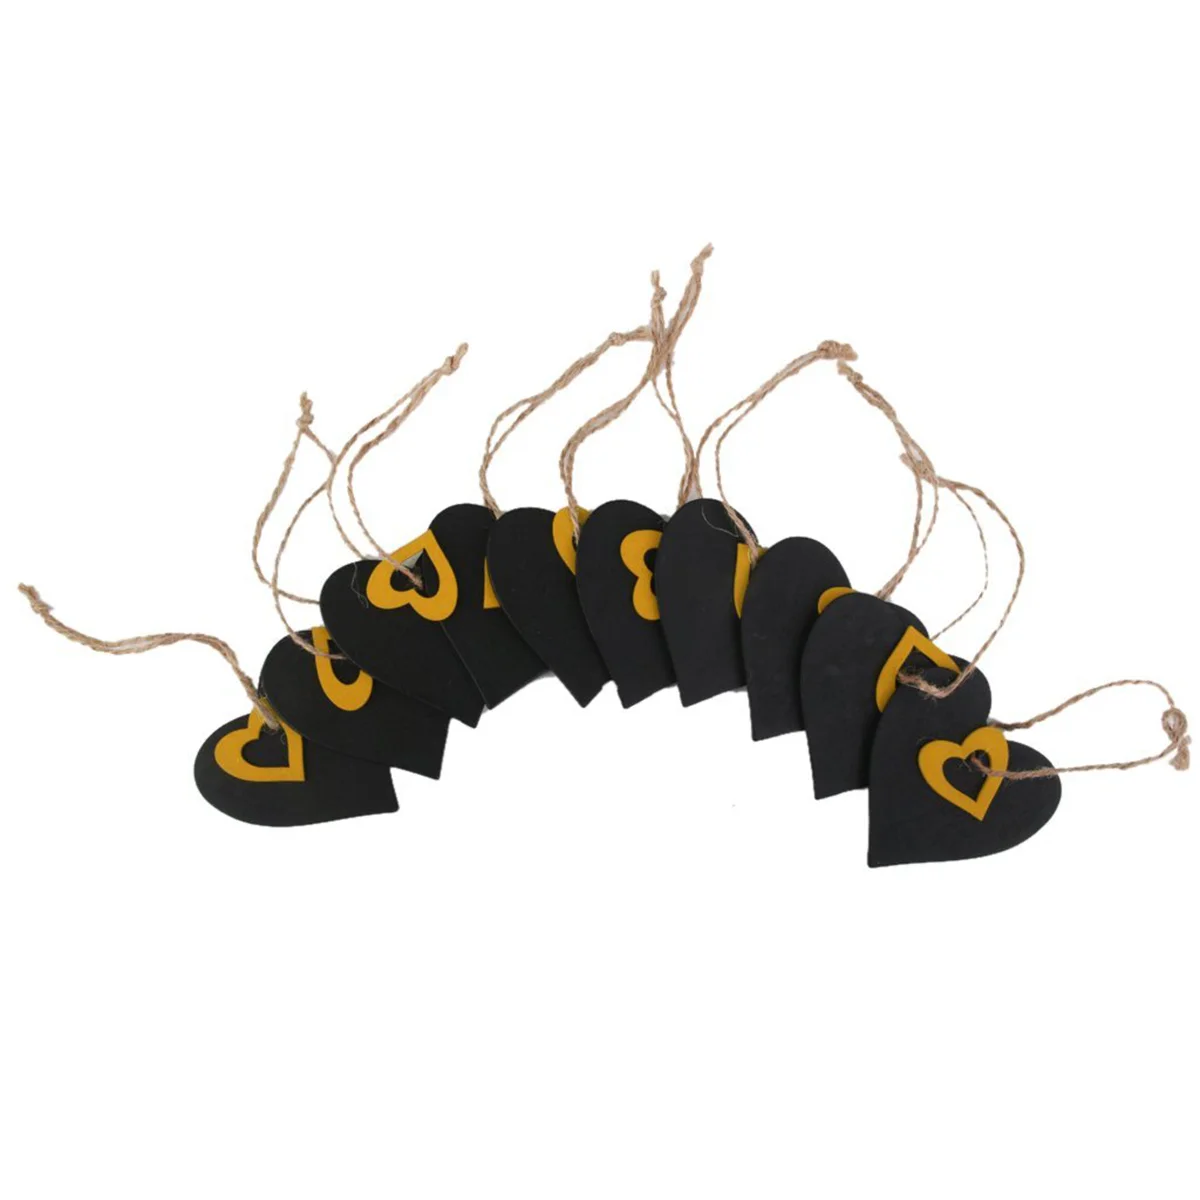 

10pcs Mini Heart Shape Hanging Wooden Blackboard Gift Price Tags (Yellow)